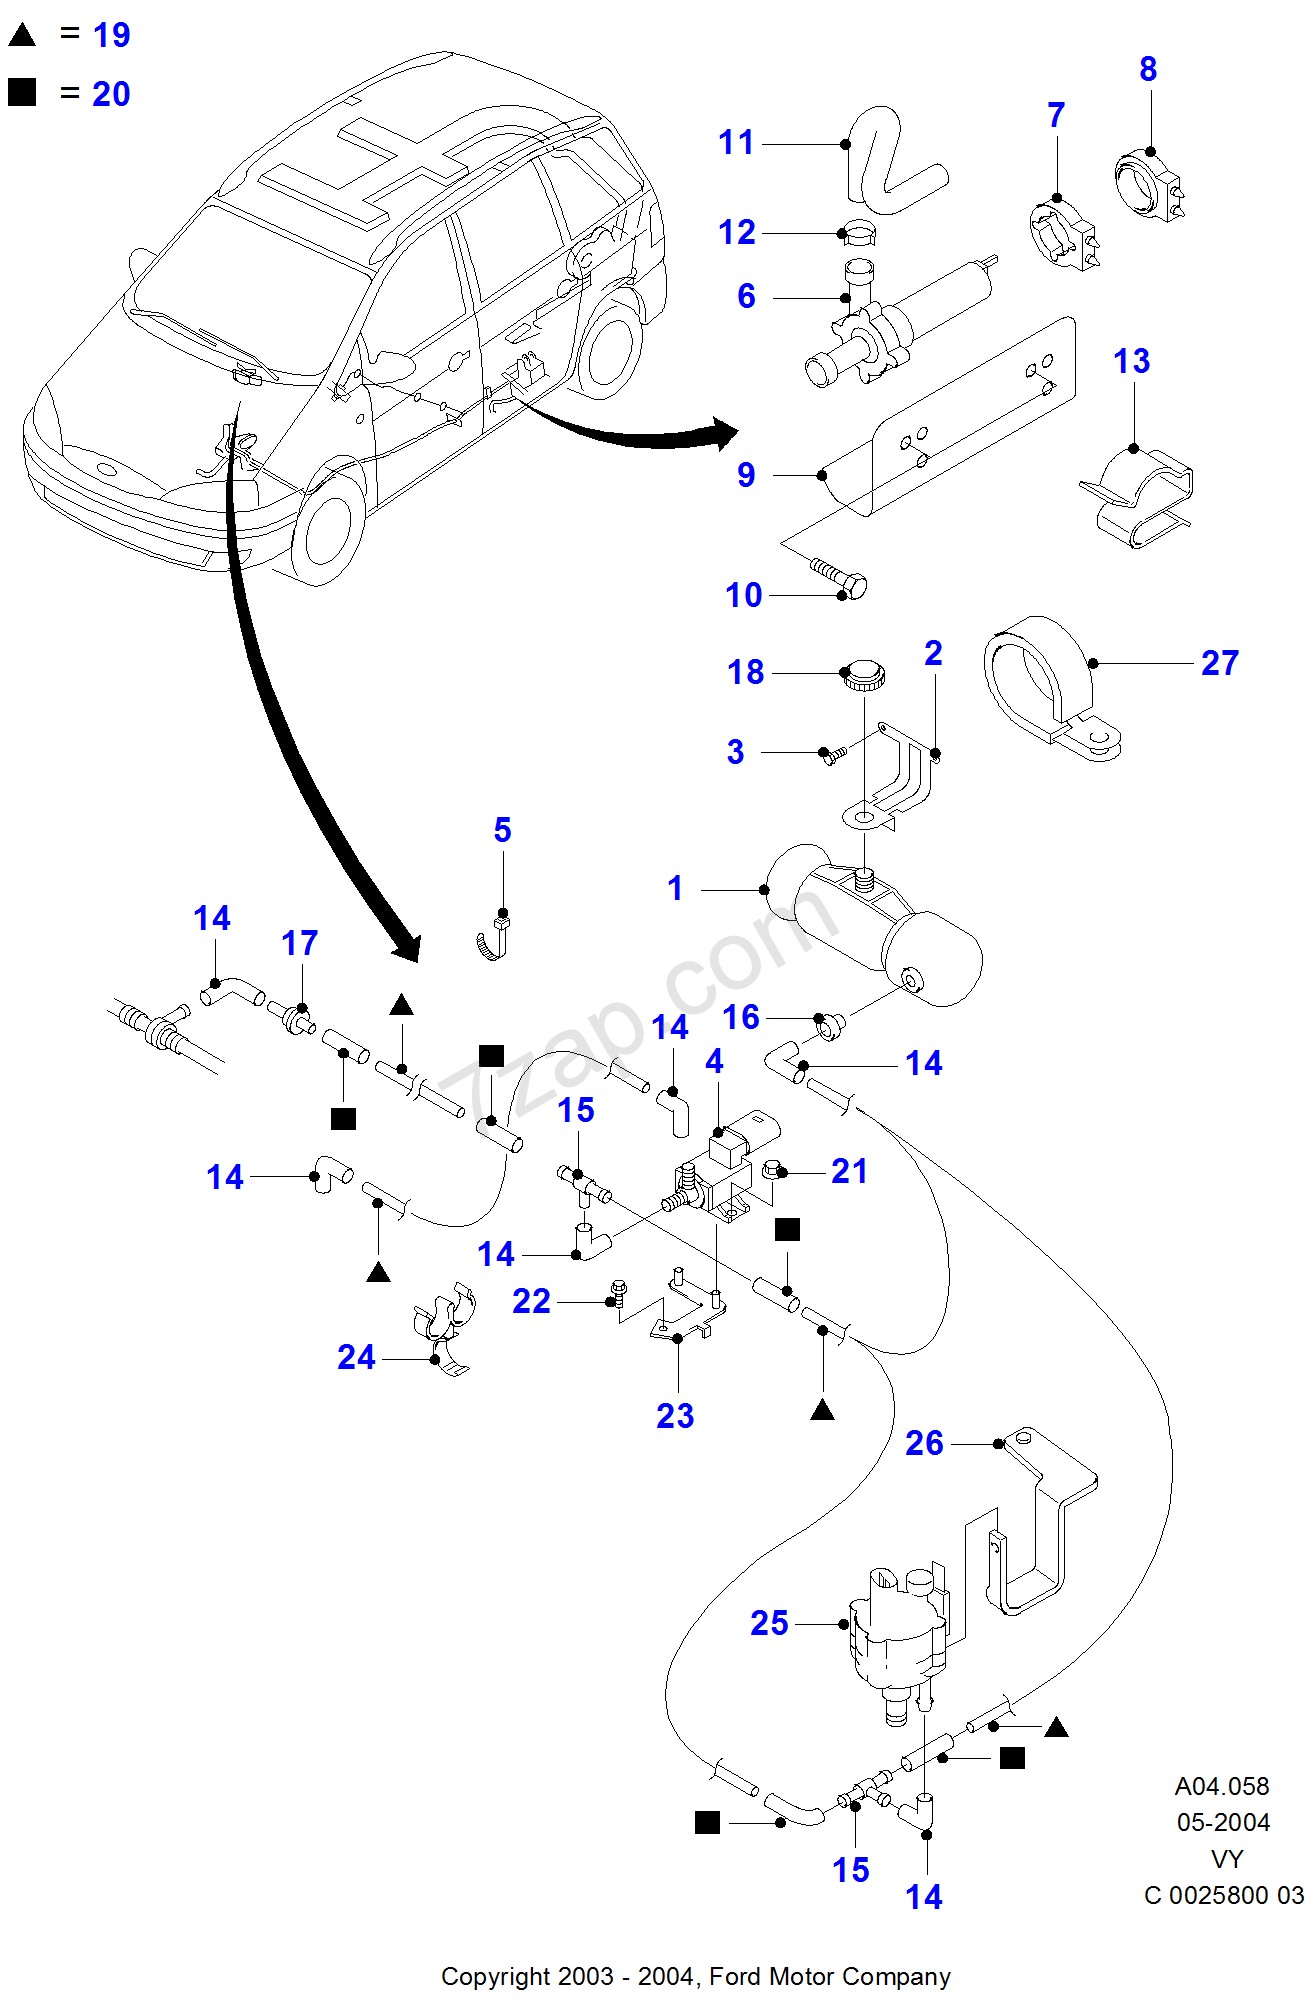 Ford Galaxy Engine Diagram Engine and Cab Pre Heater ford Galaxy 2000 2006 Vy